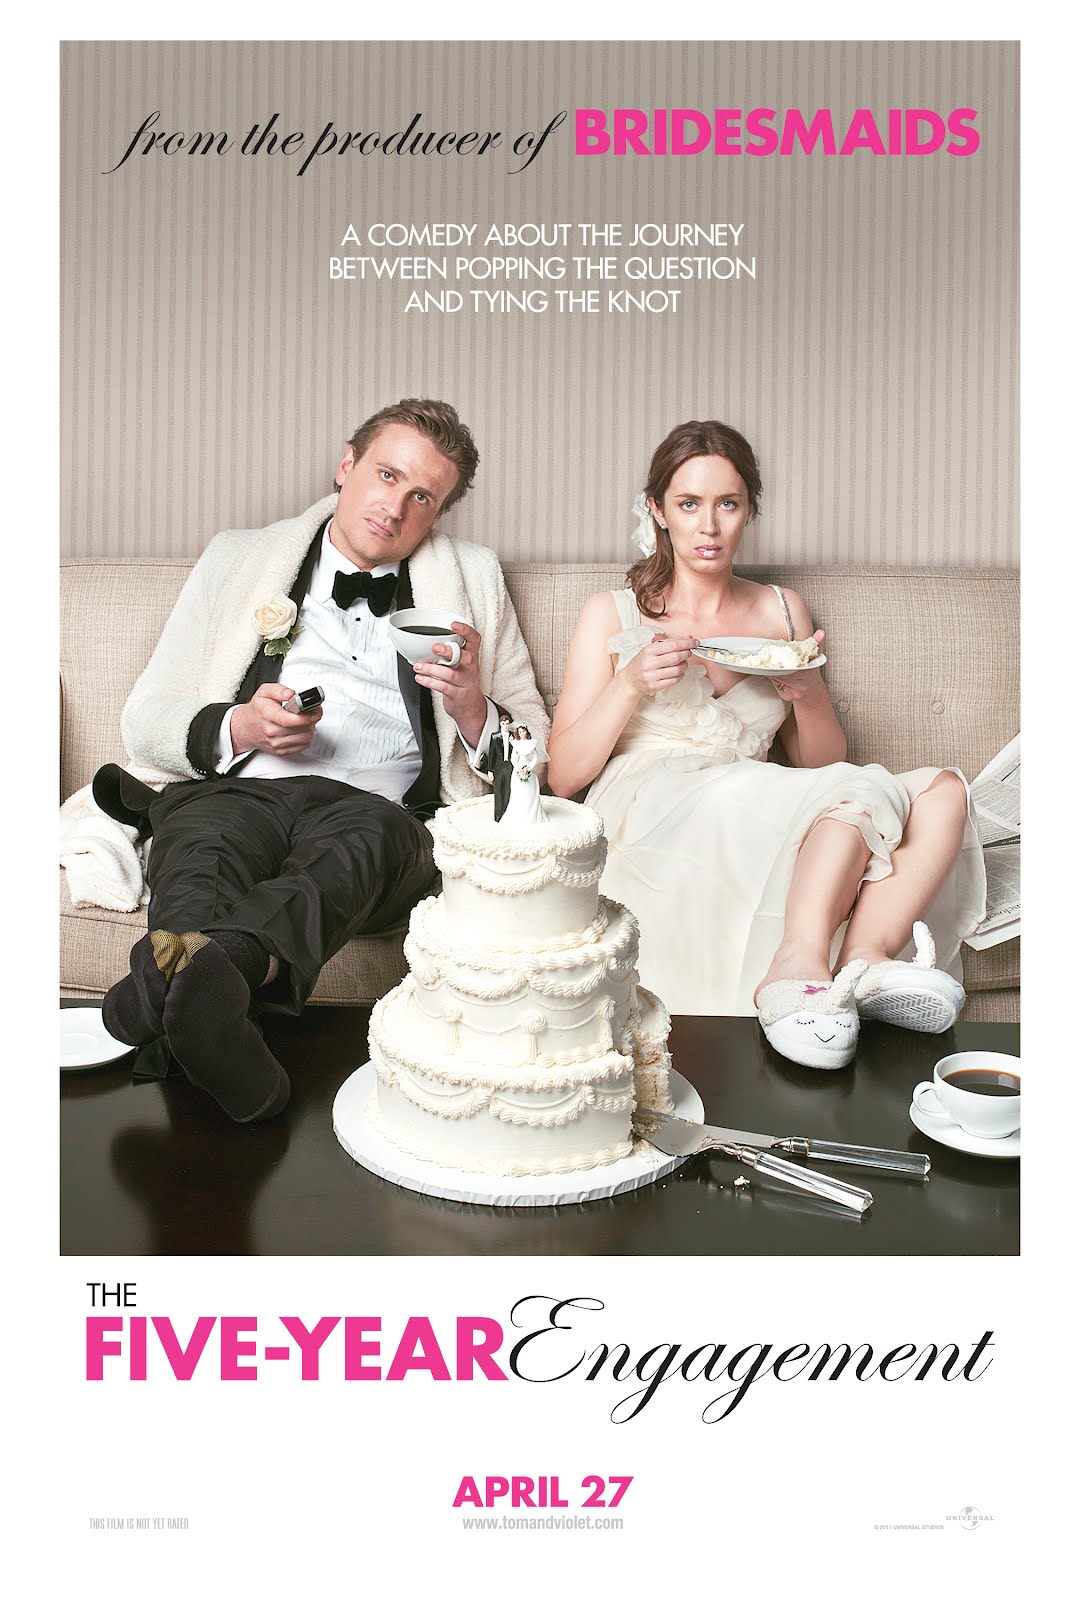 https://blogger.googleusercontent.com/img/b/R29vZ2xl/AVvXsEhUrkvA2rWCmsrGg9KPoeDaCFdDeHcLK5rbqqQ0NtKh1jCa5F2Gs7VyqCSjbbDx2GvkEeGzRw8KmHAnQVynamH8SznTnMhxxTkd4yd0WnA89sJUj4swquLswrtQQQvOofPP_wFHZywb0tI/s1600/the-five-year-engagement-movie-poster.jpg